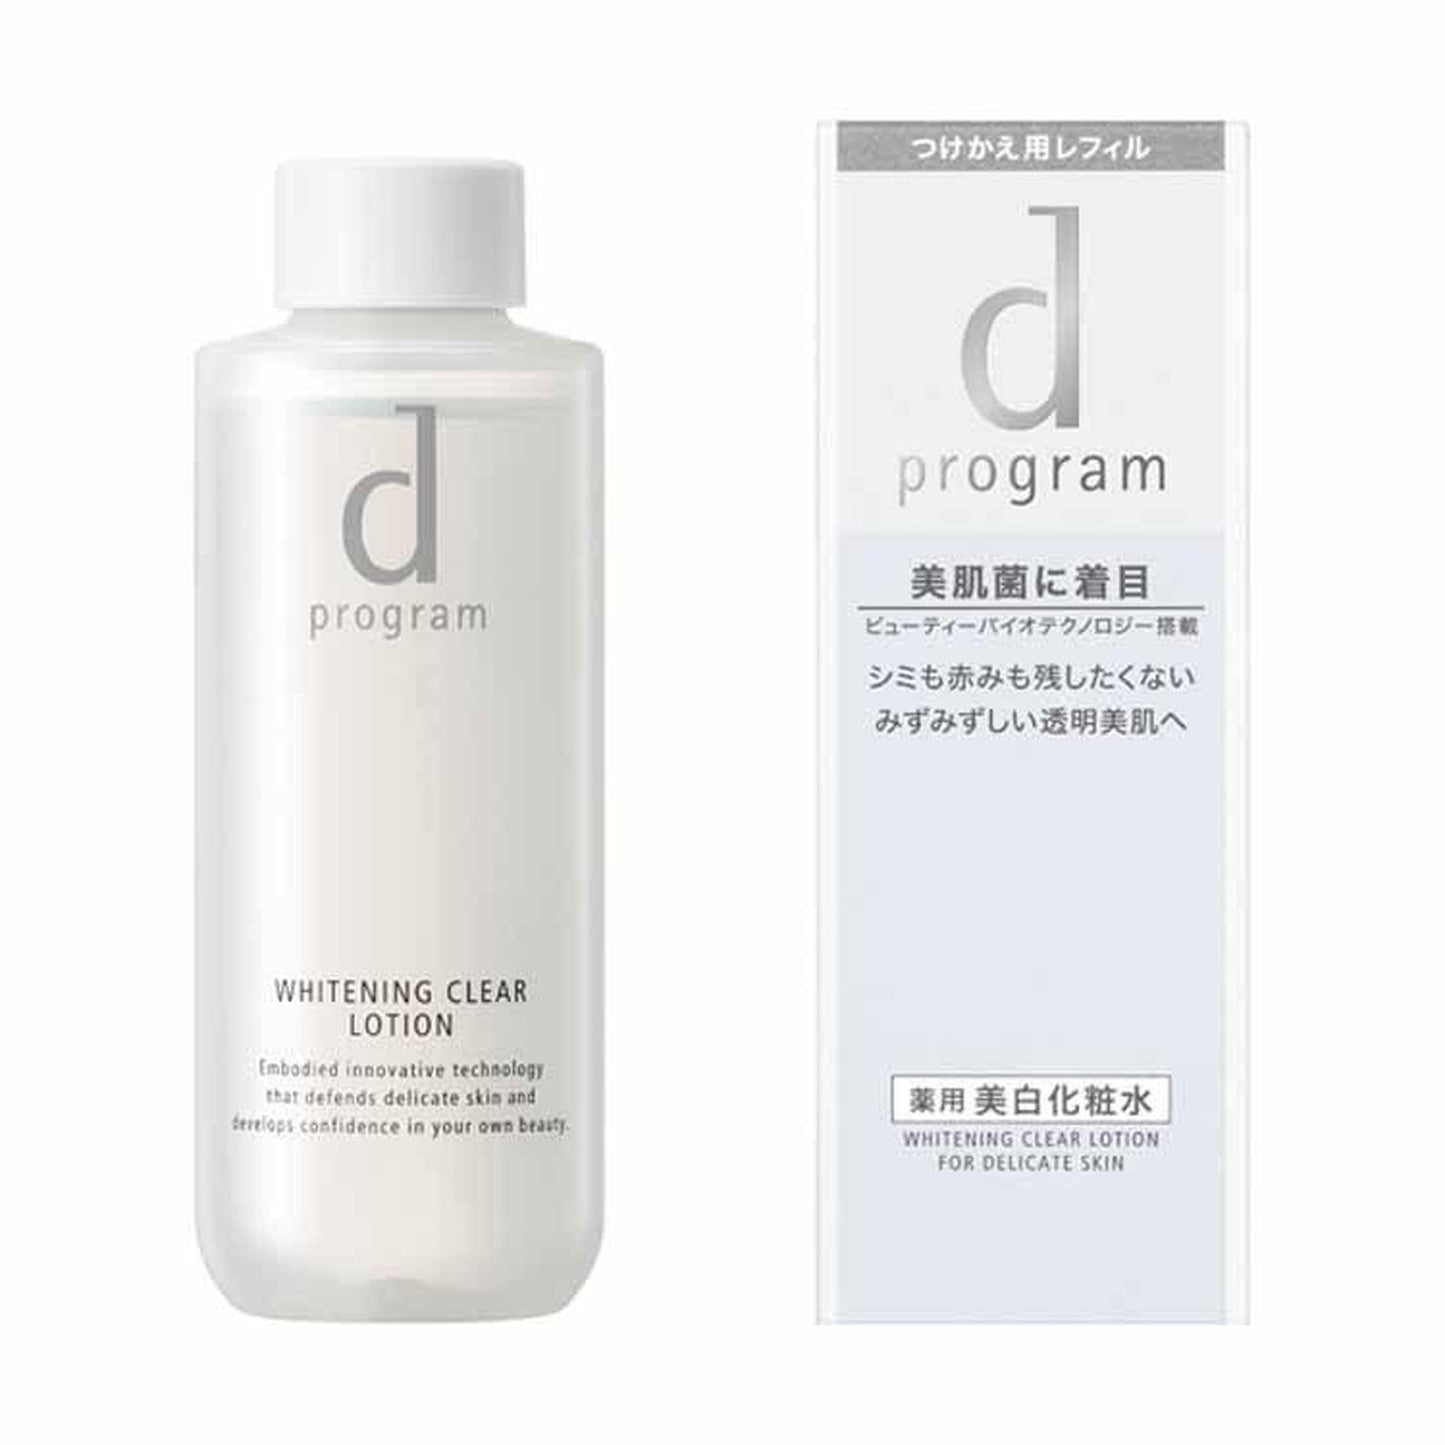 d program whitening clear lotion MB refill white